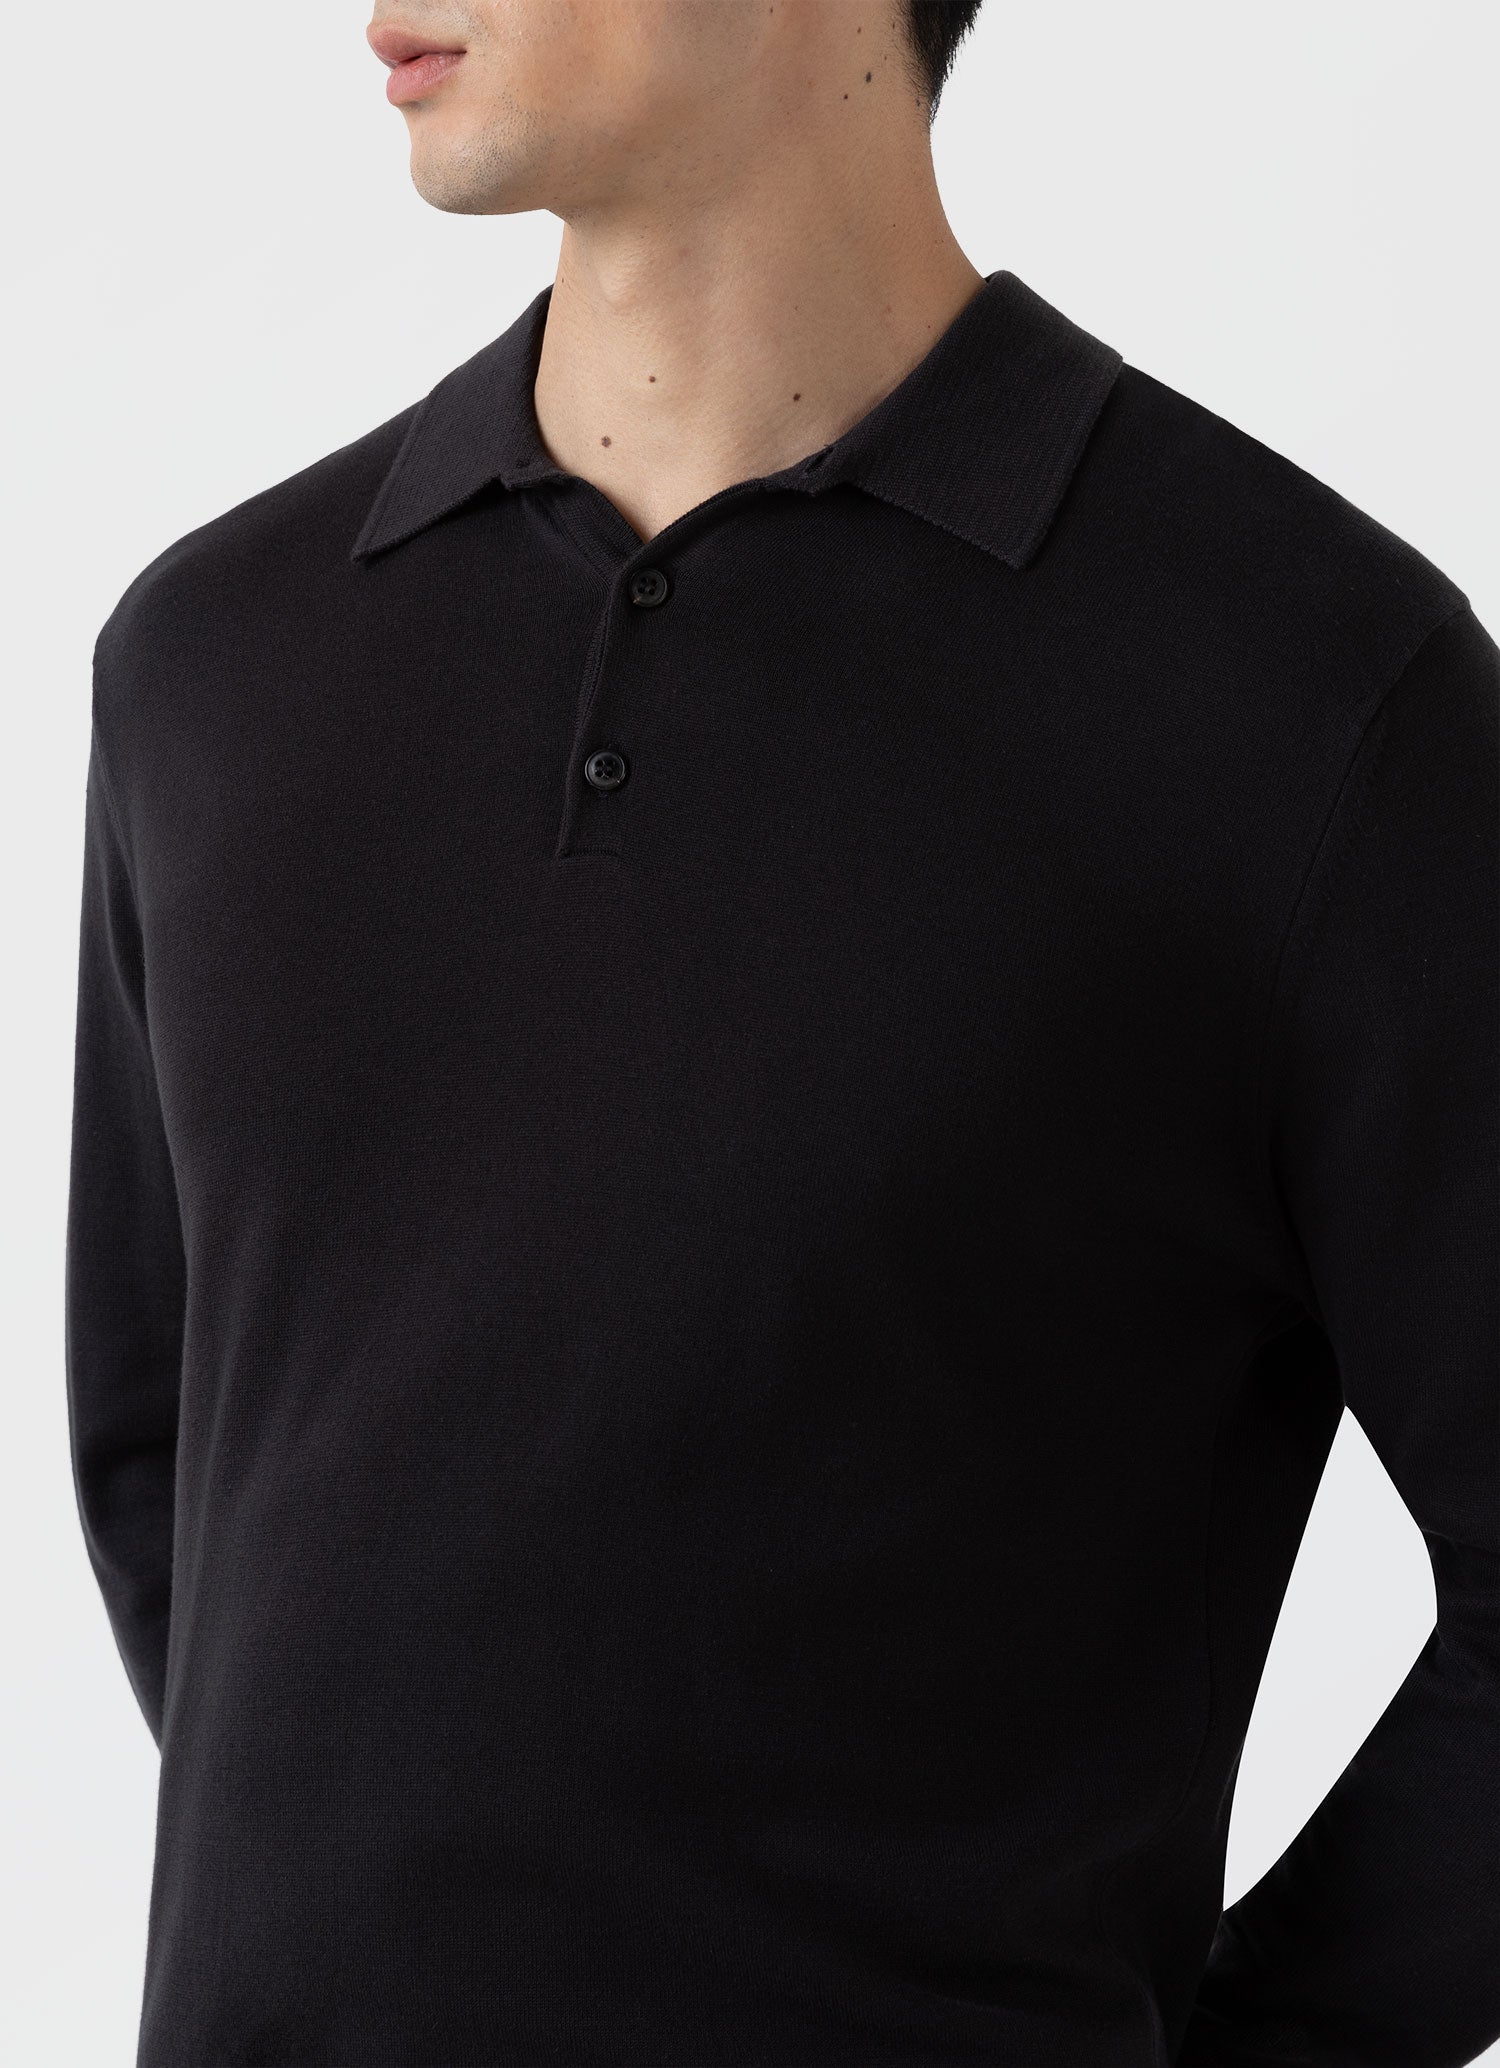 Men's Long Sleeve Sea Island Cotton Polo Shirt in Black | Sunspel